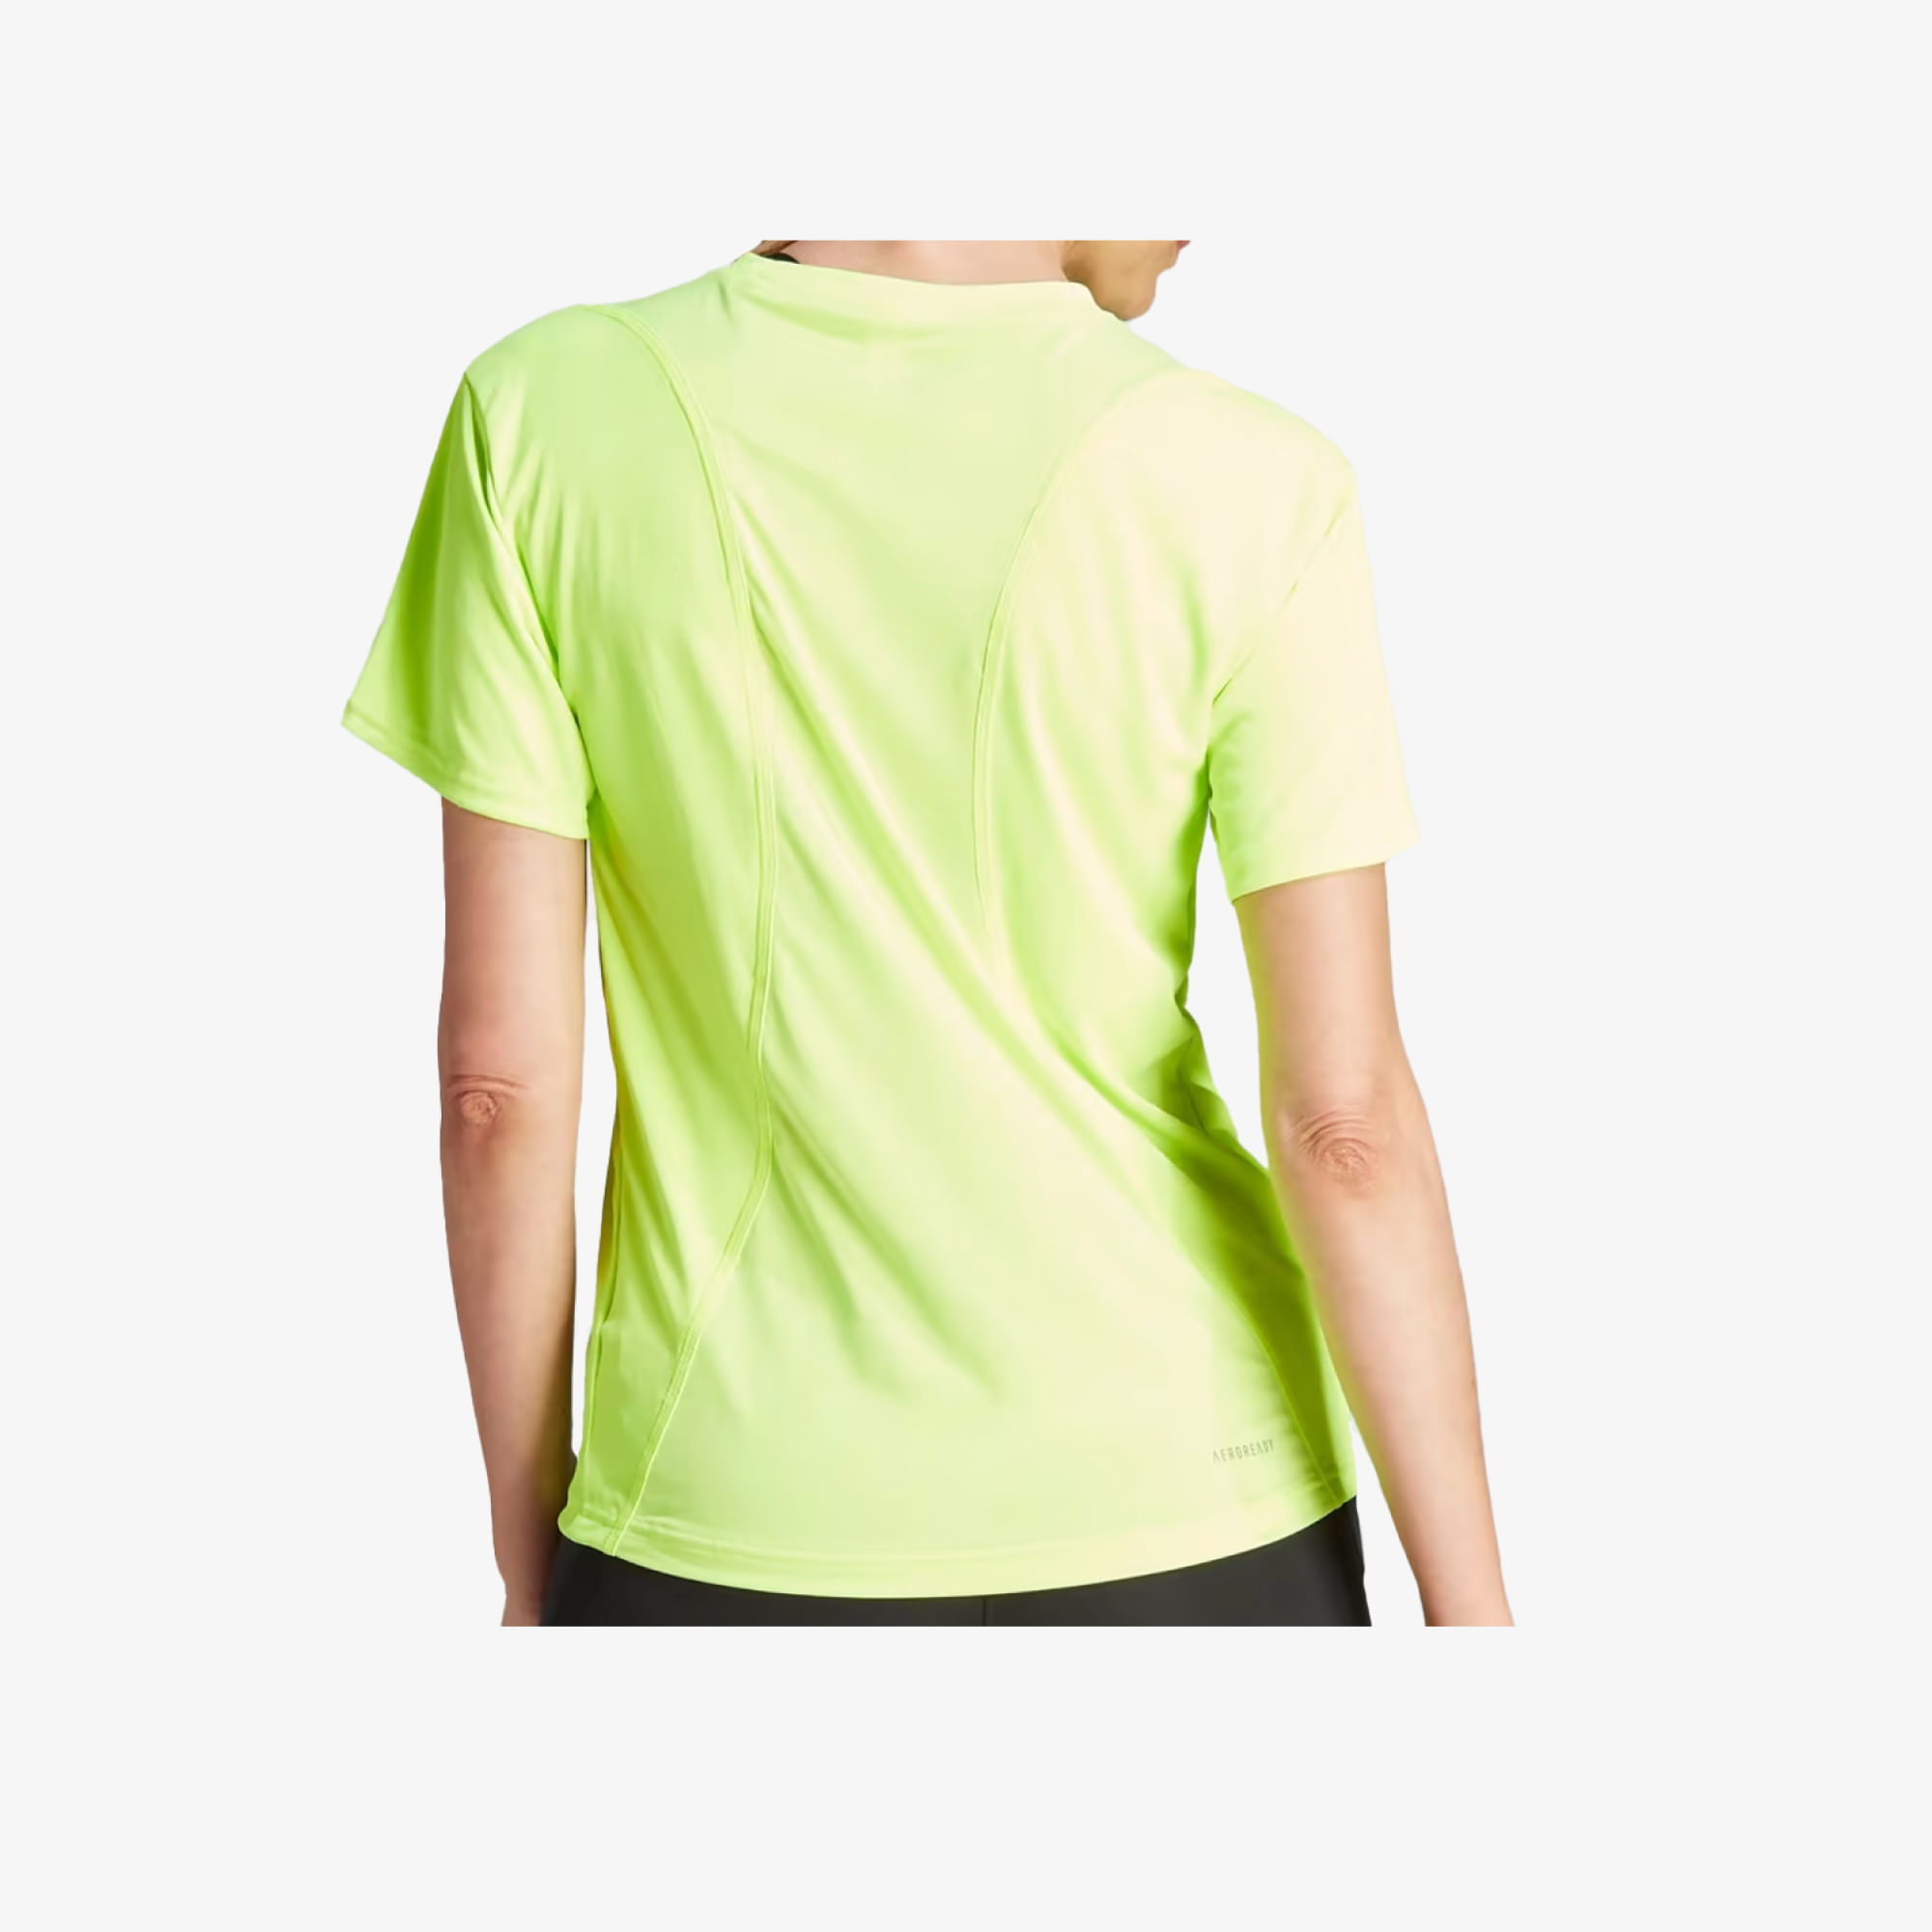 Camiseta mujer verde